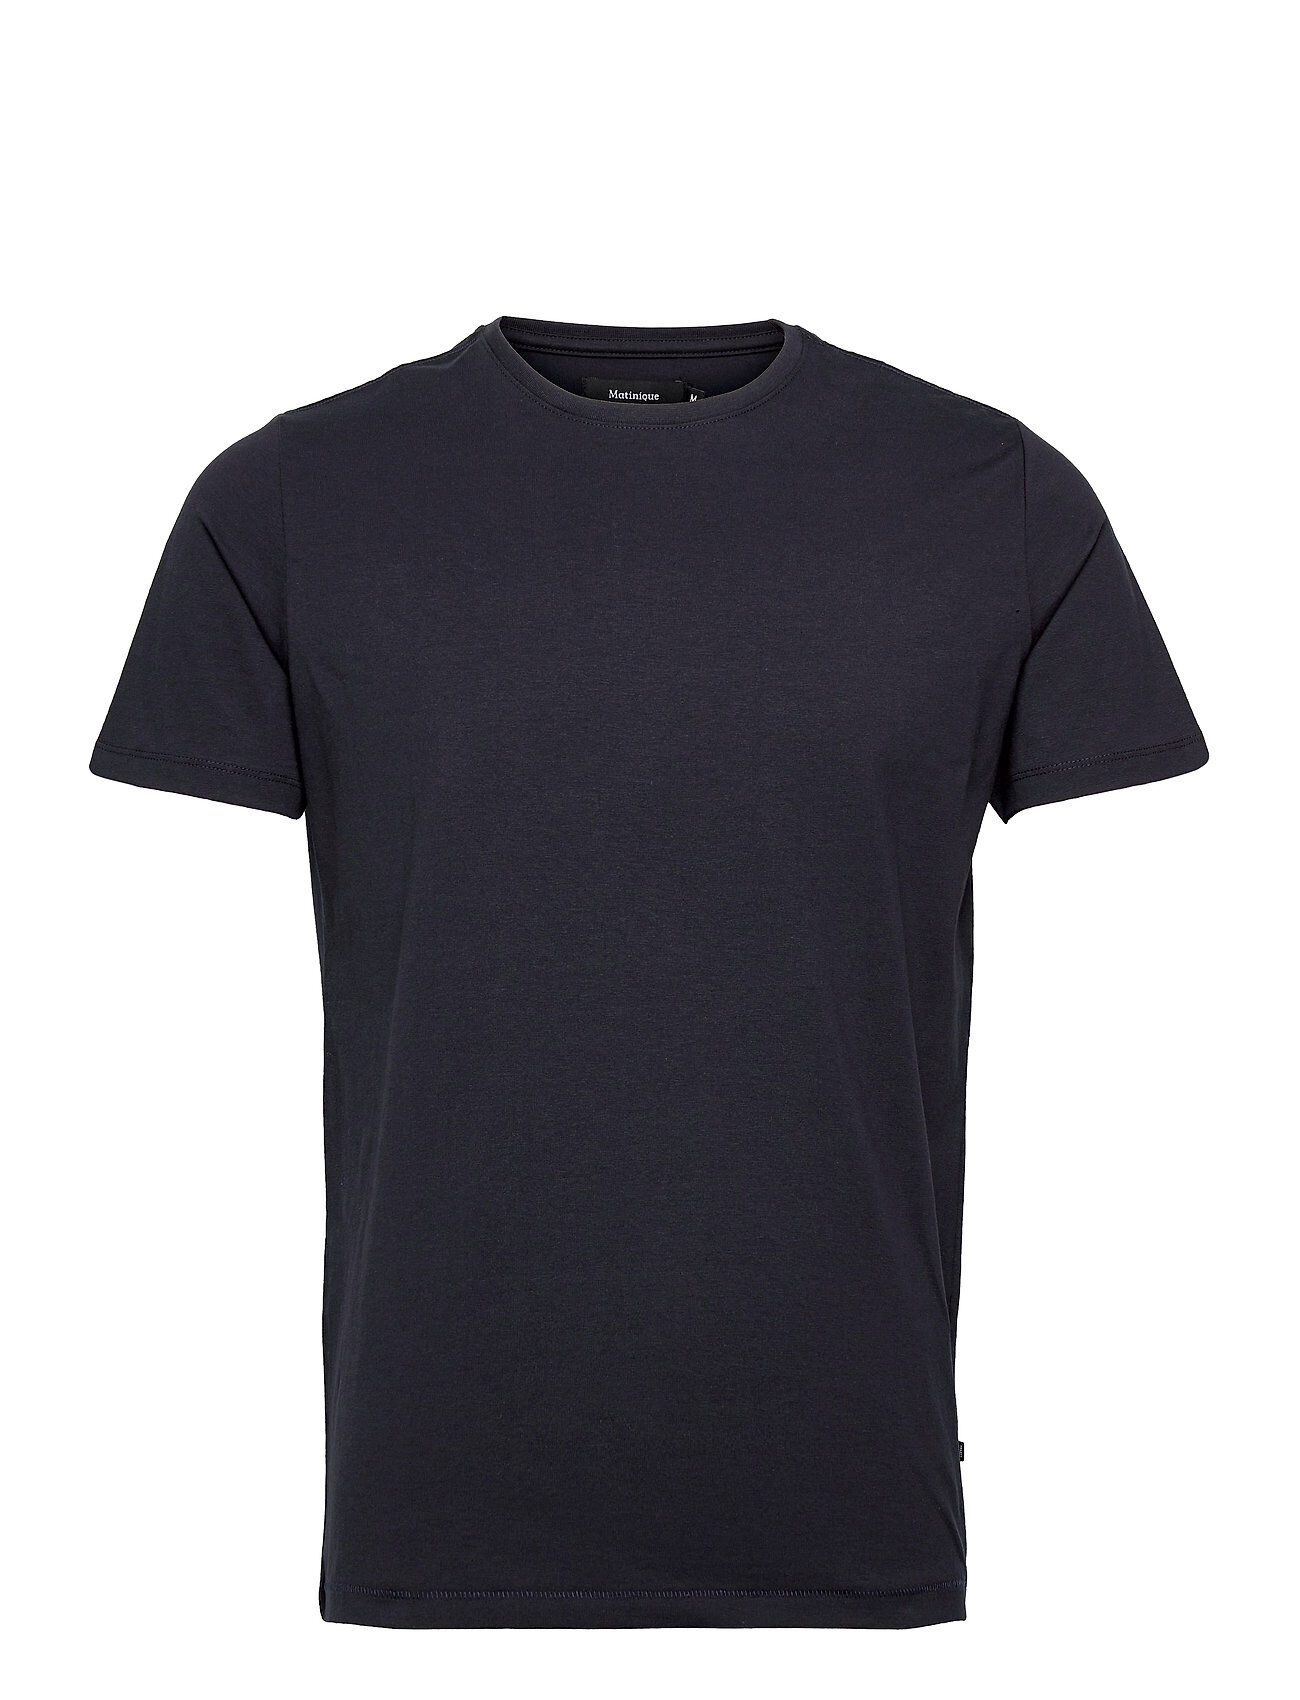 Matinique Jermalink T-shirts Short-sleeved Blå Matinique